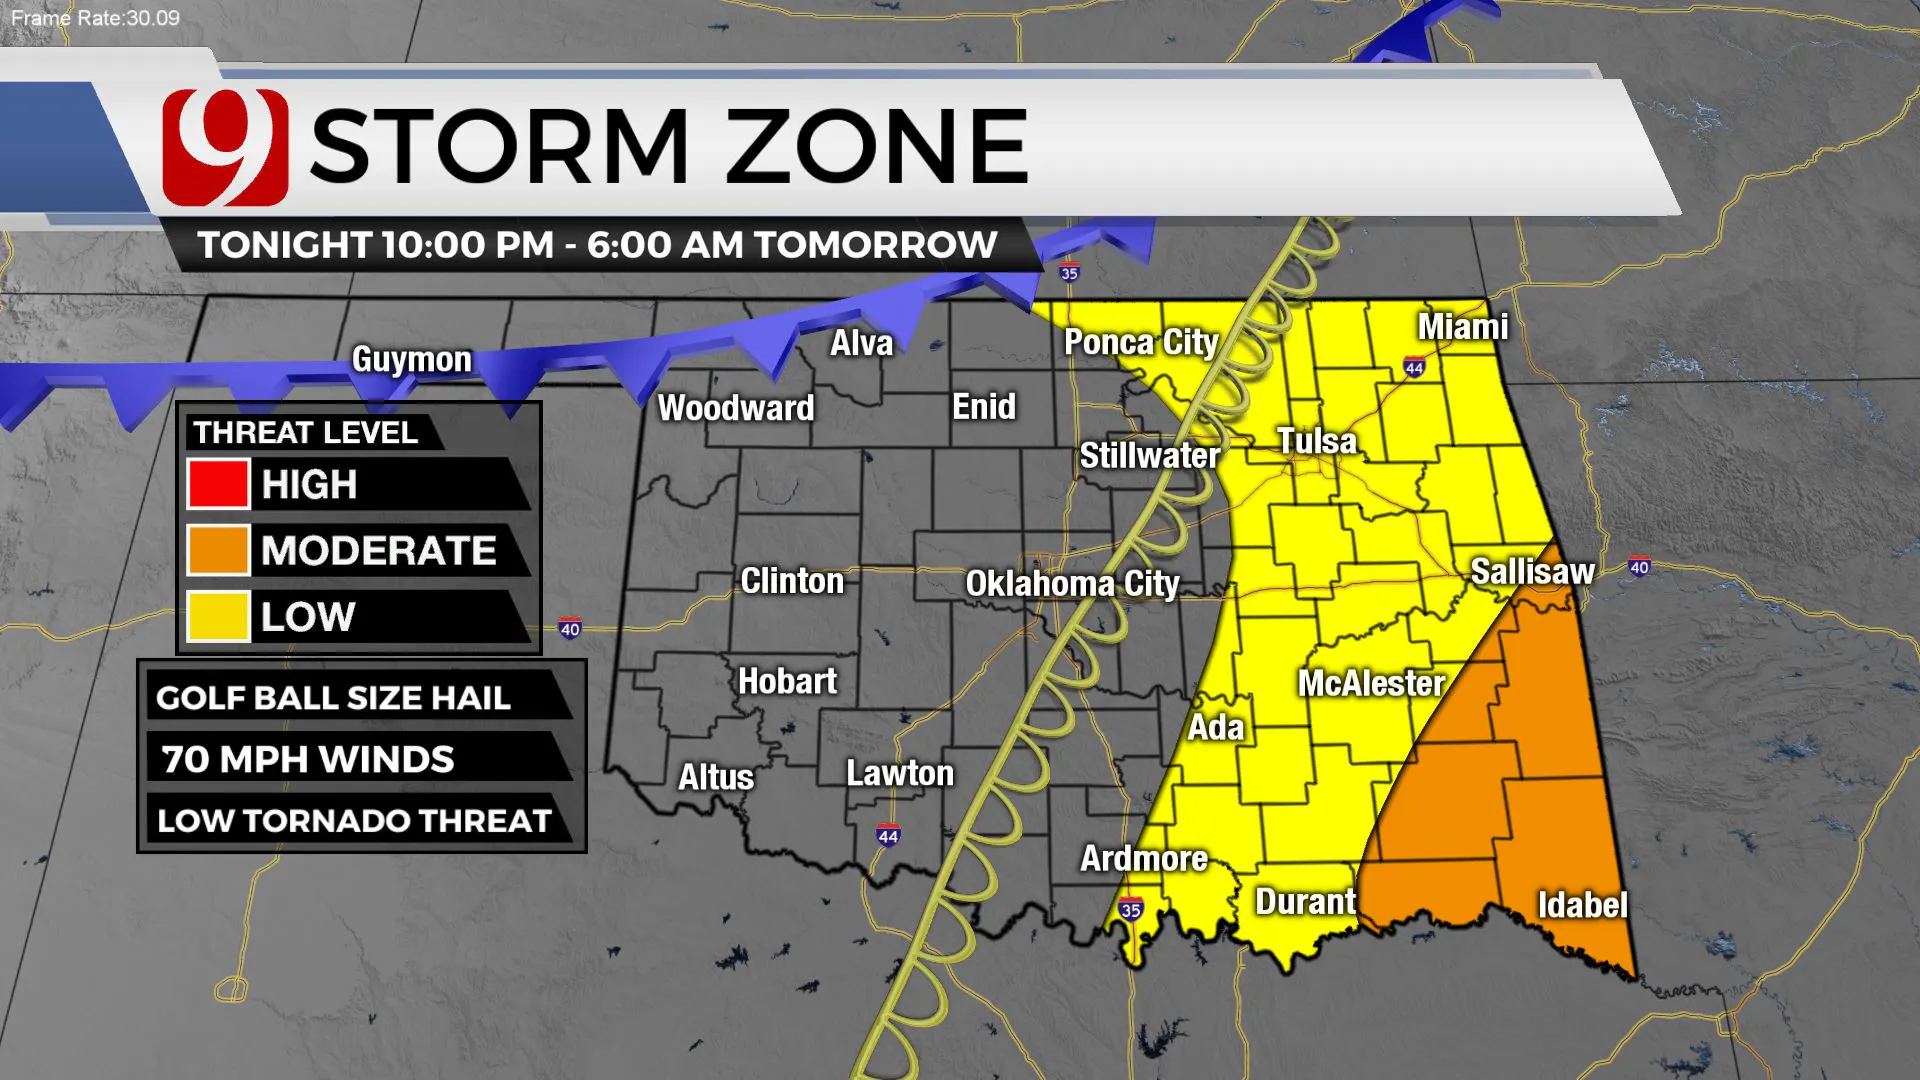 Storm zone Tuesday night into Wednesday.